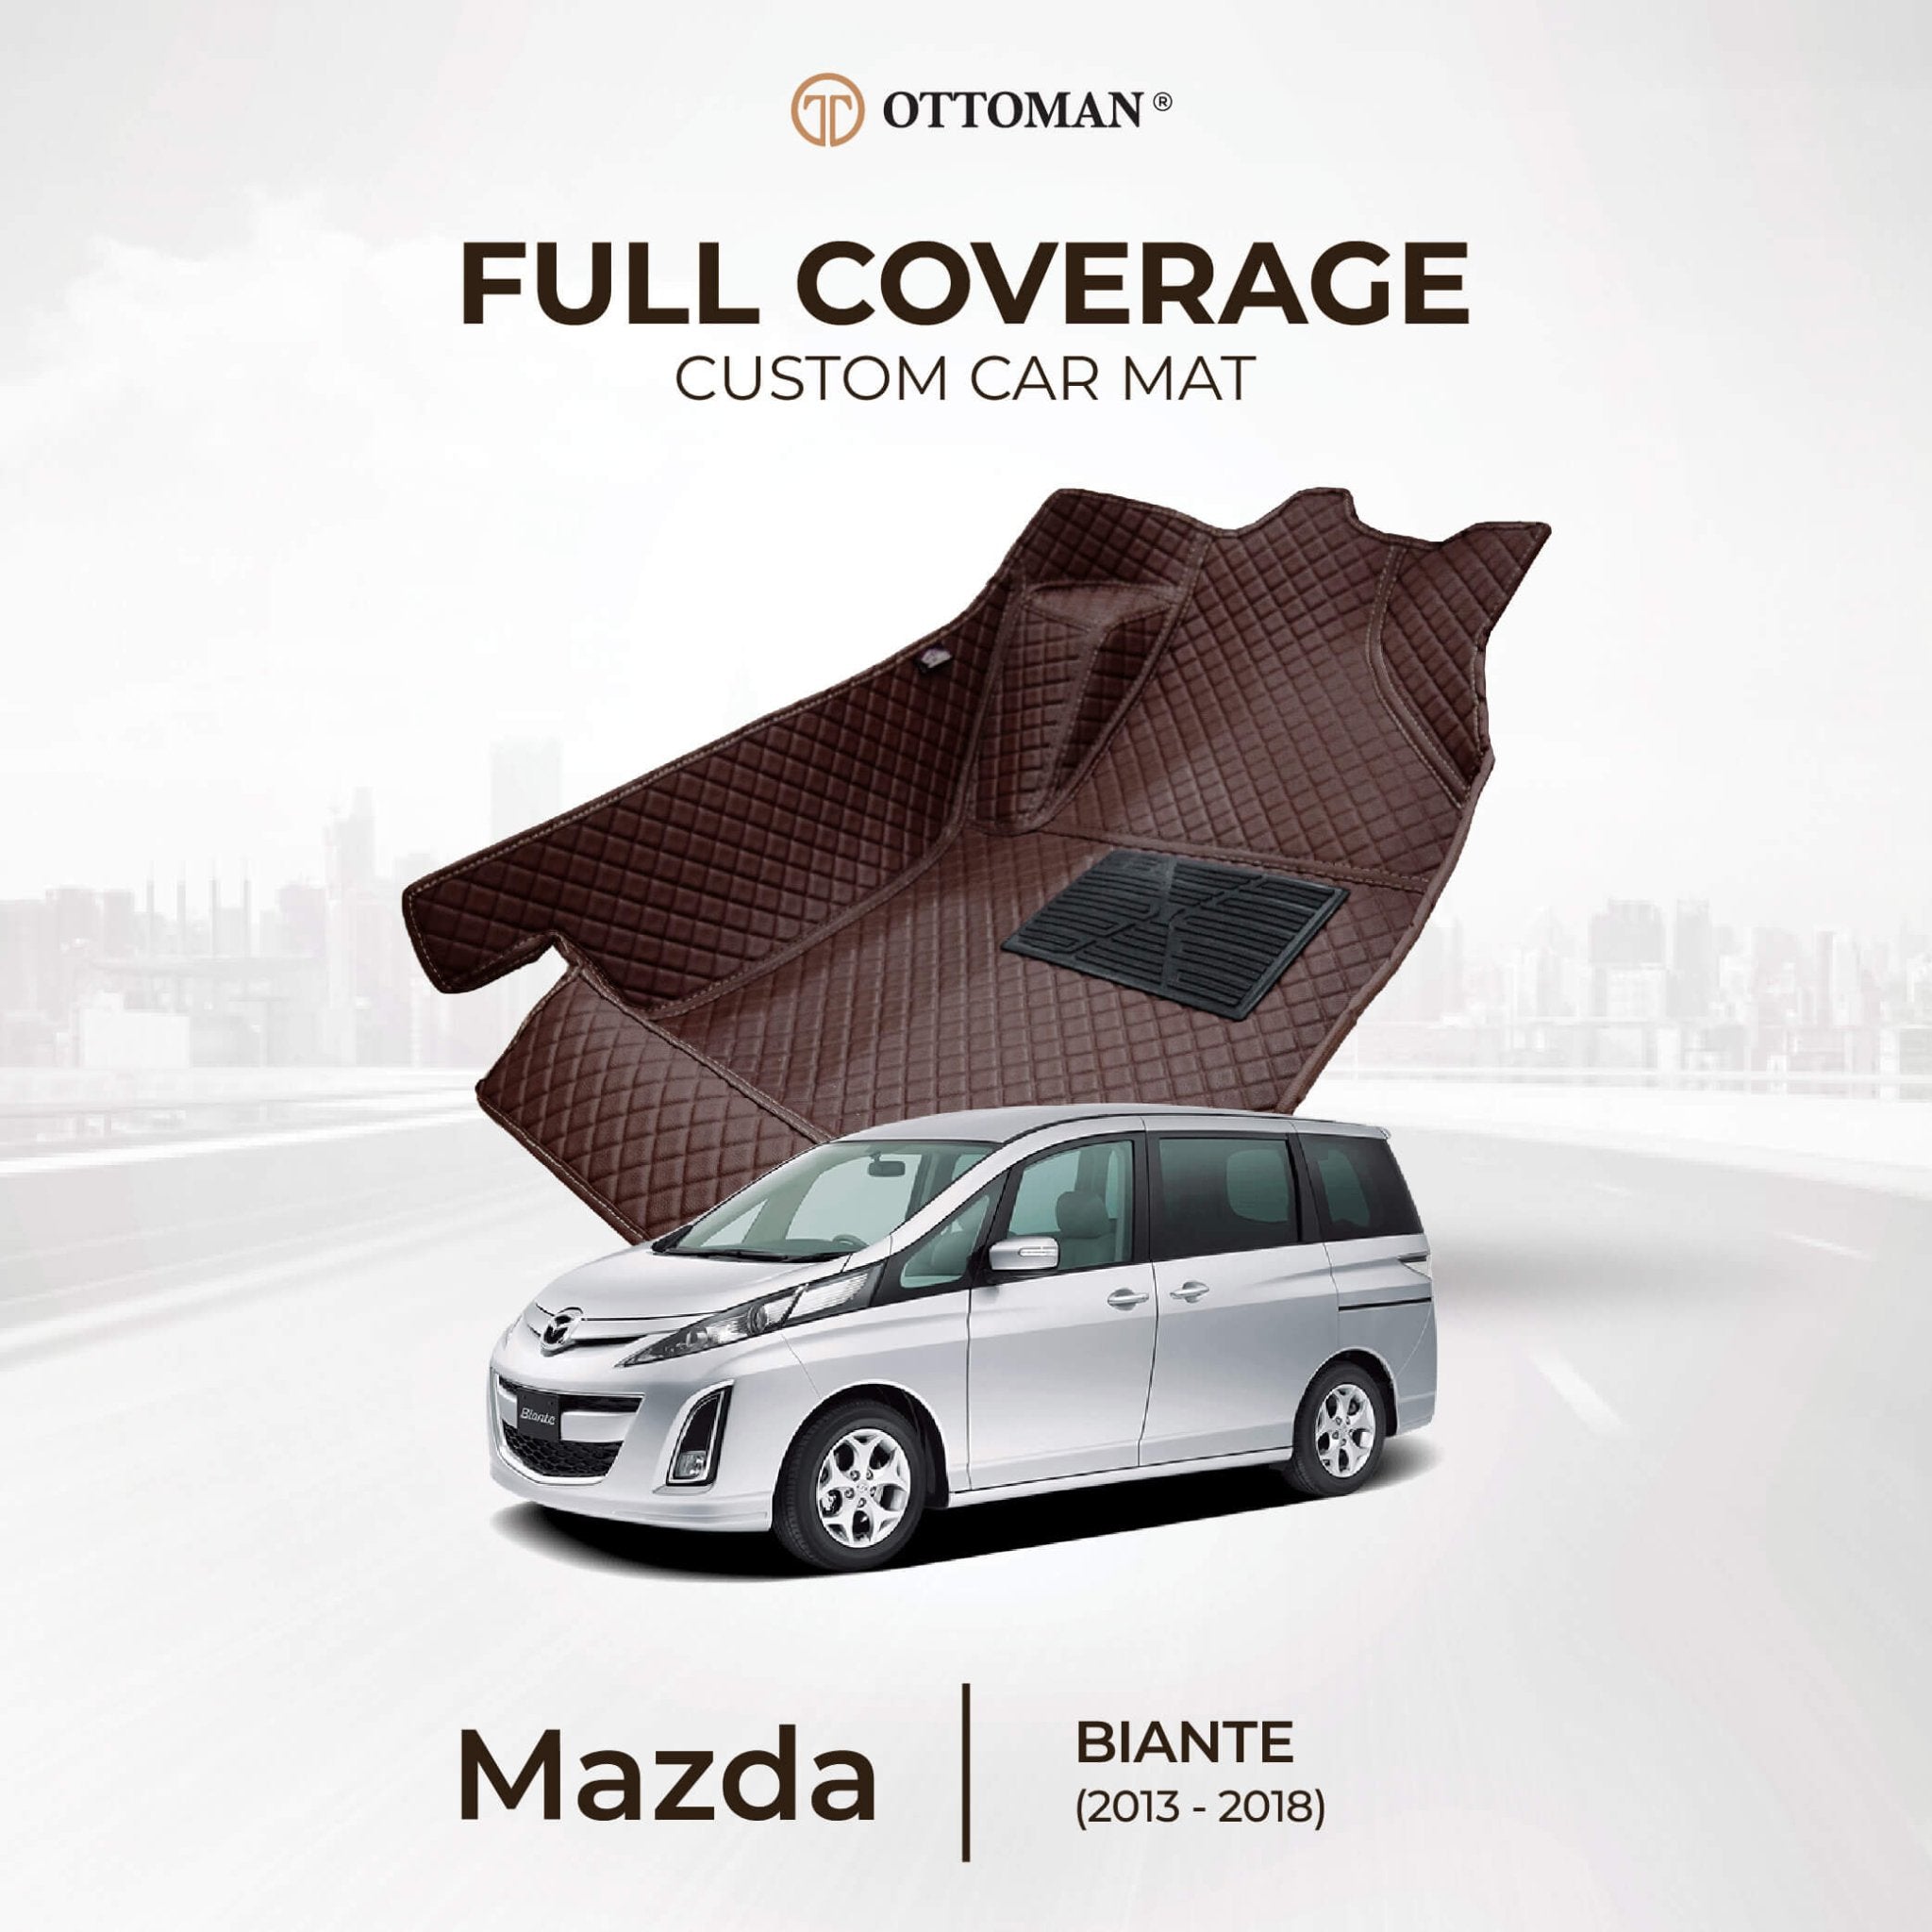 Mazda Biante (2013-2018) Car Mat in Klang Selangor, Penang, Johor Bahru - Ottoman Car Mats